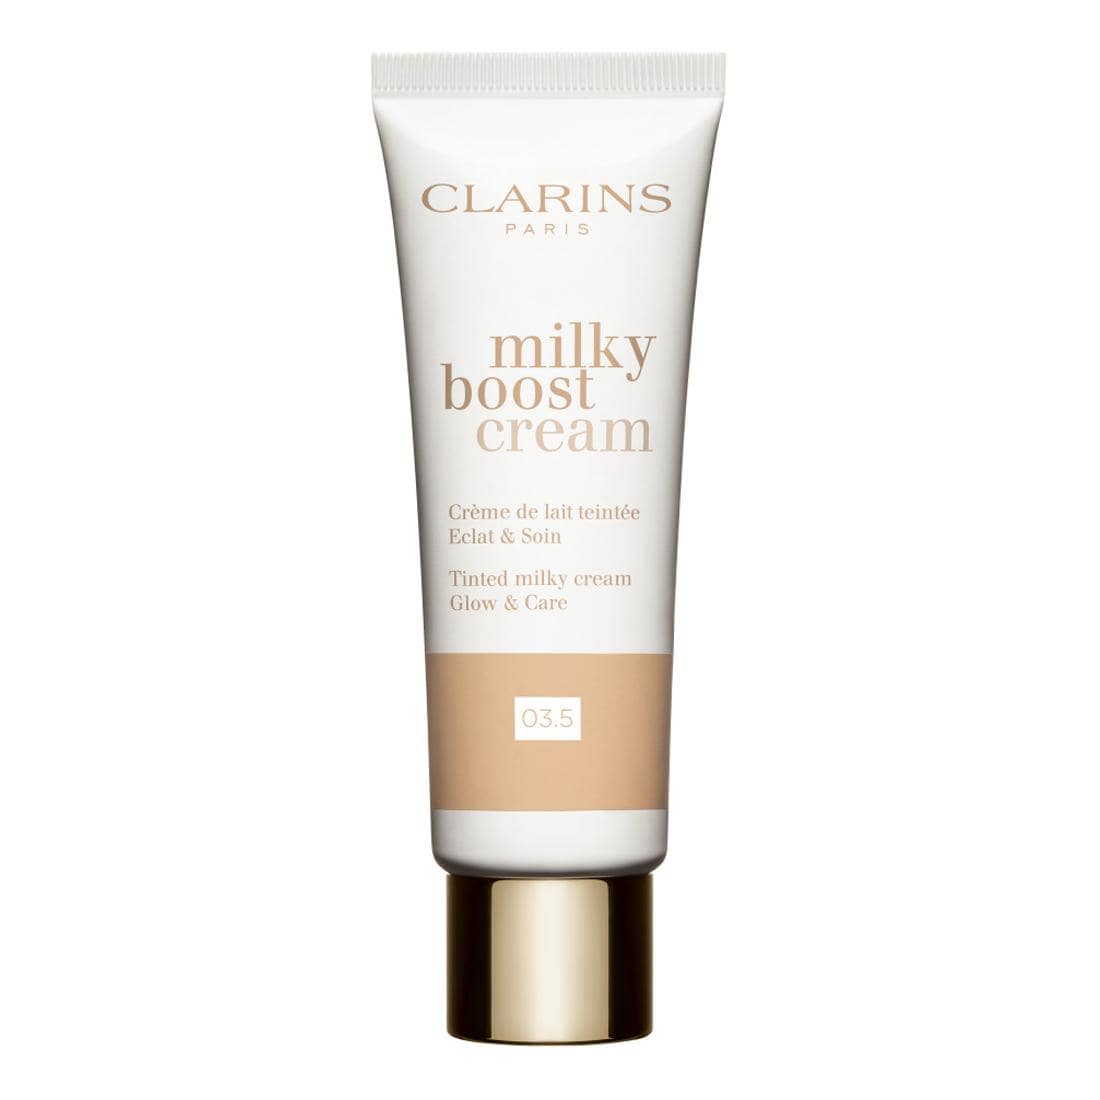 Clarins Milky Boost Cream, 03.5 milky honey